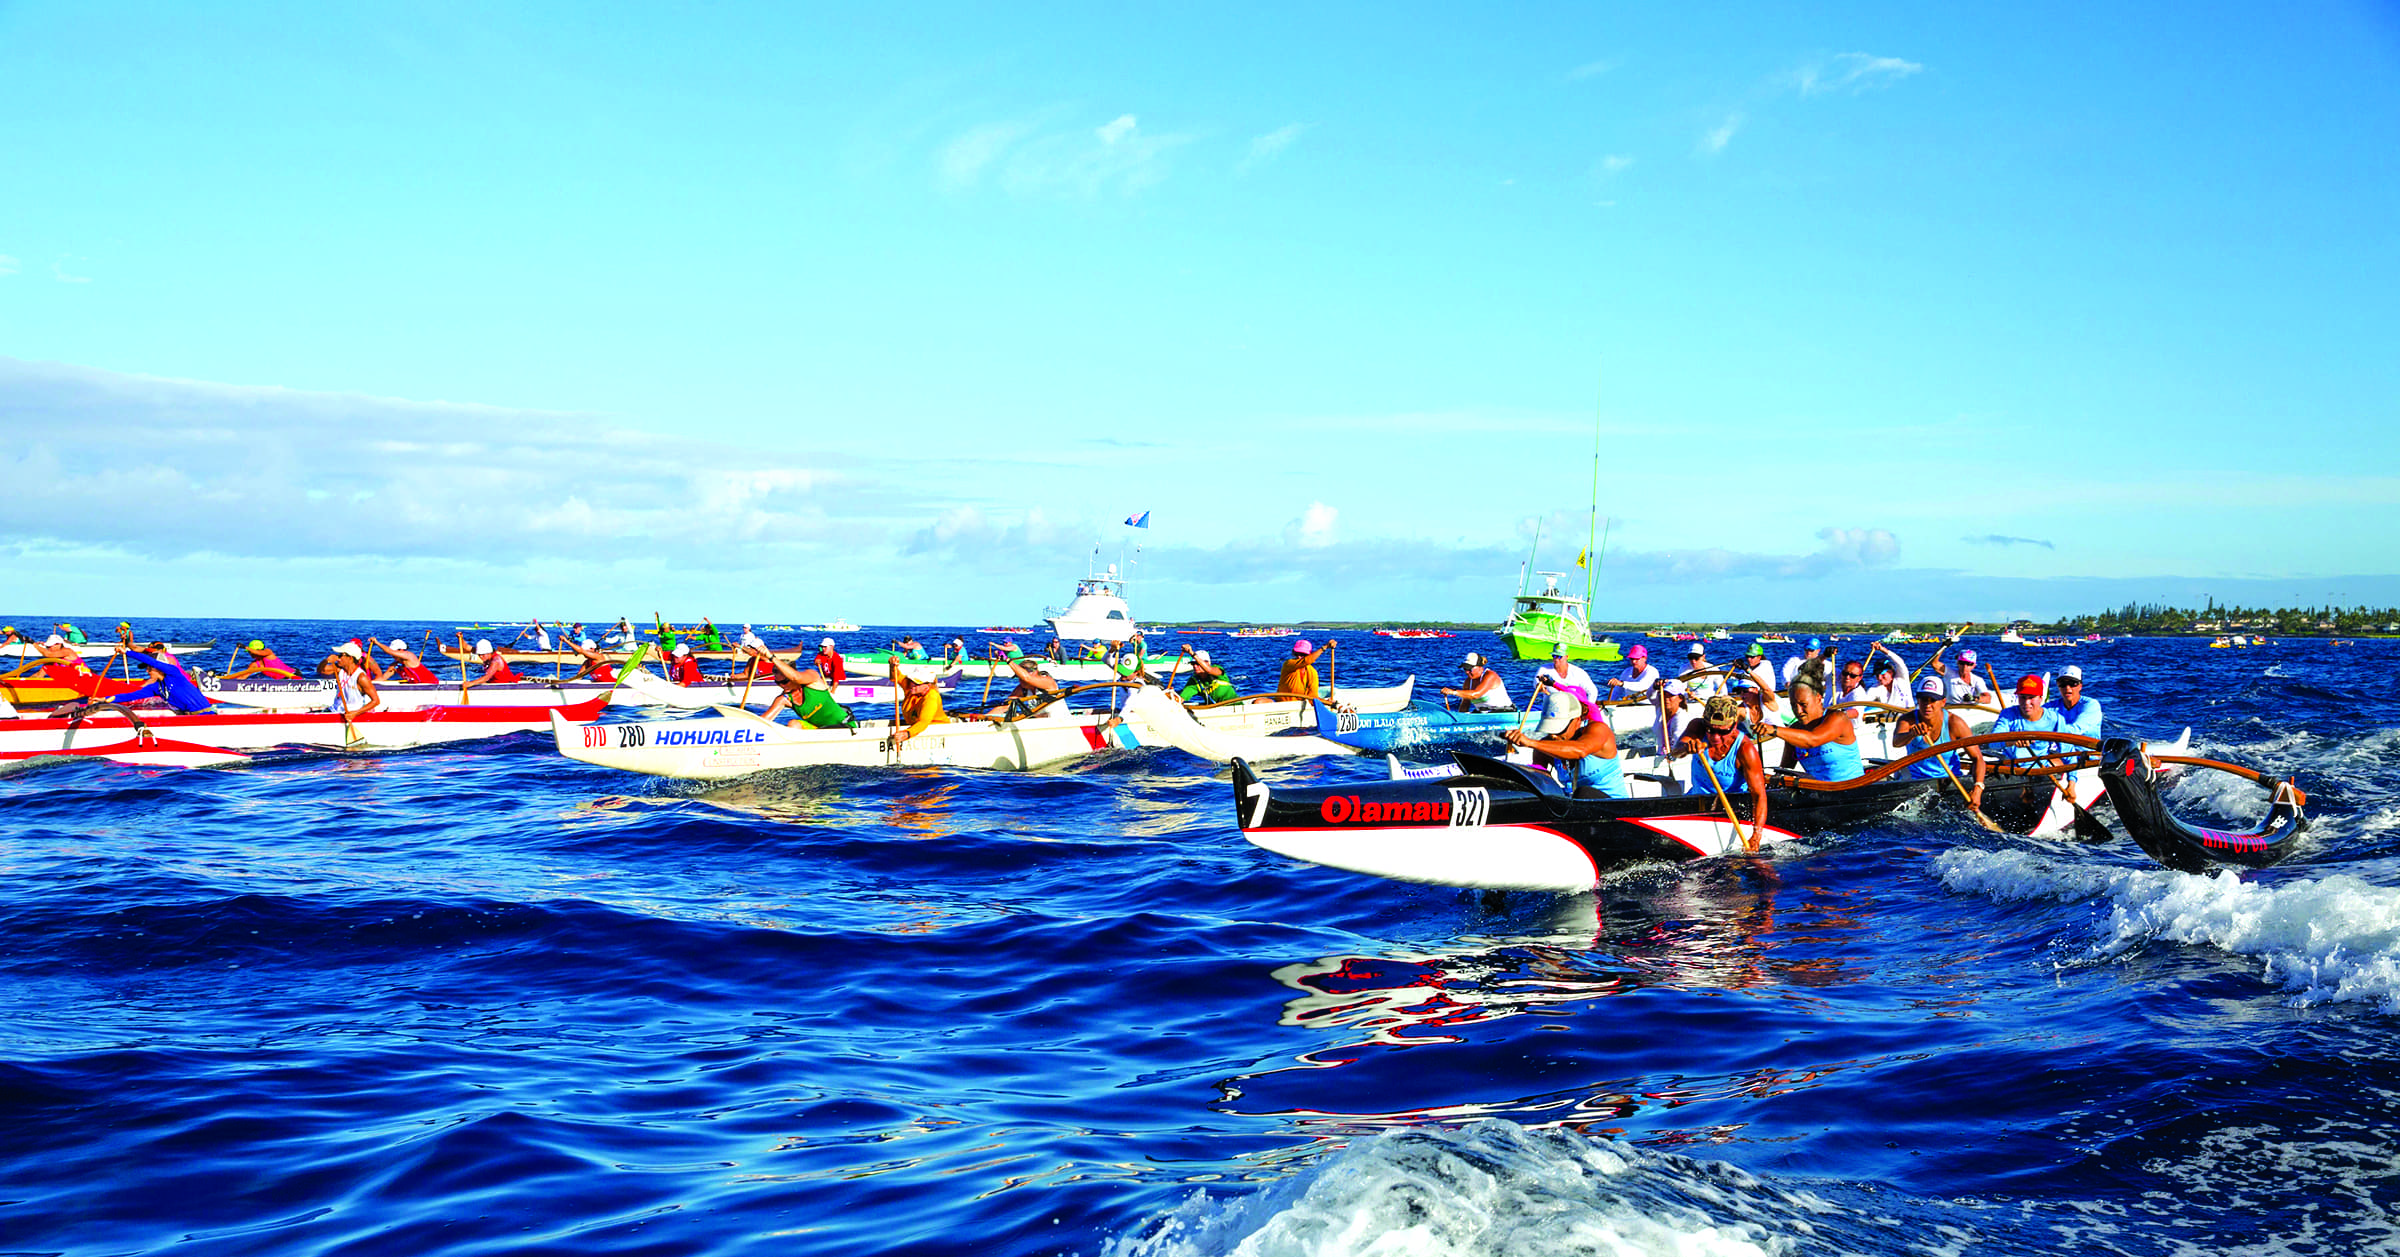 Queen Lili'uokalani Outrigger Canoe Race Returns to Kona KWXX Hilo, HI